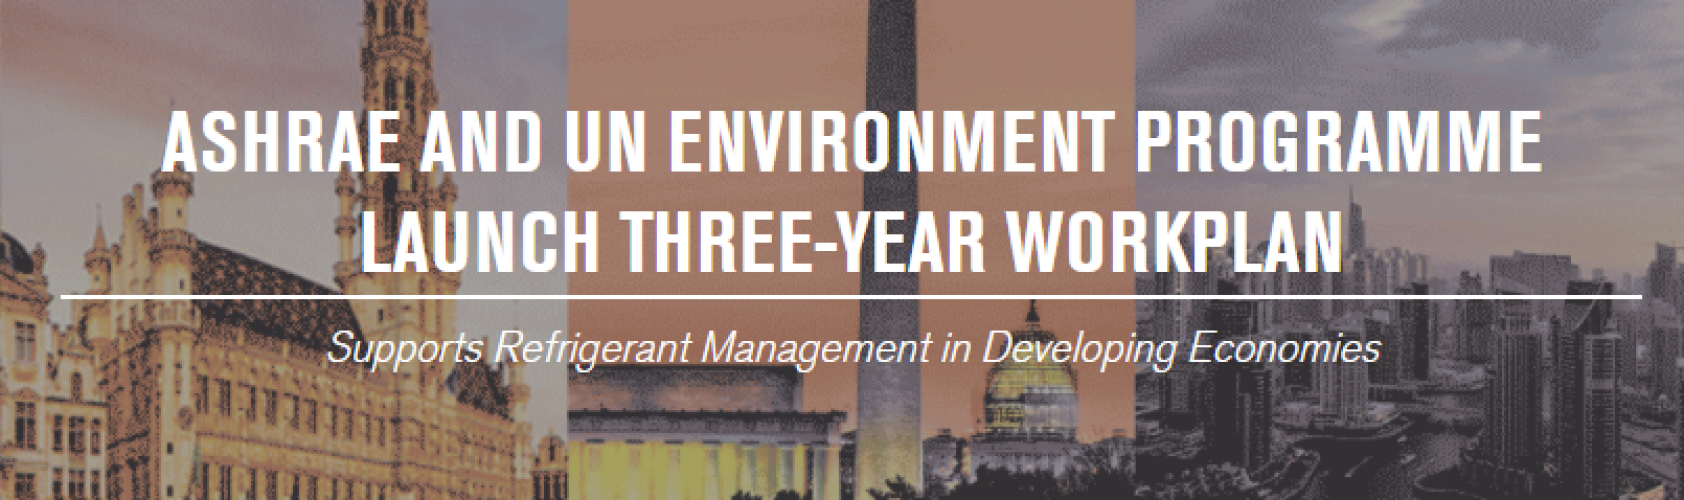 ashrae-and-un-environment-programme-launch-three-year-workplan